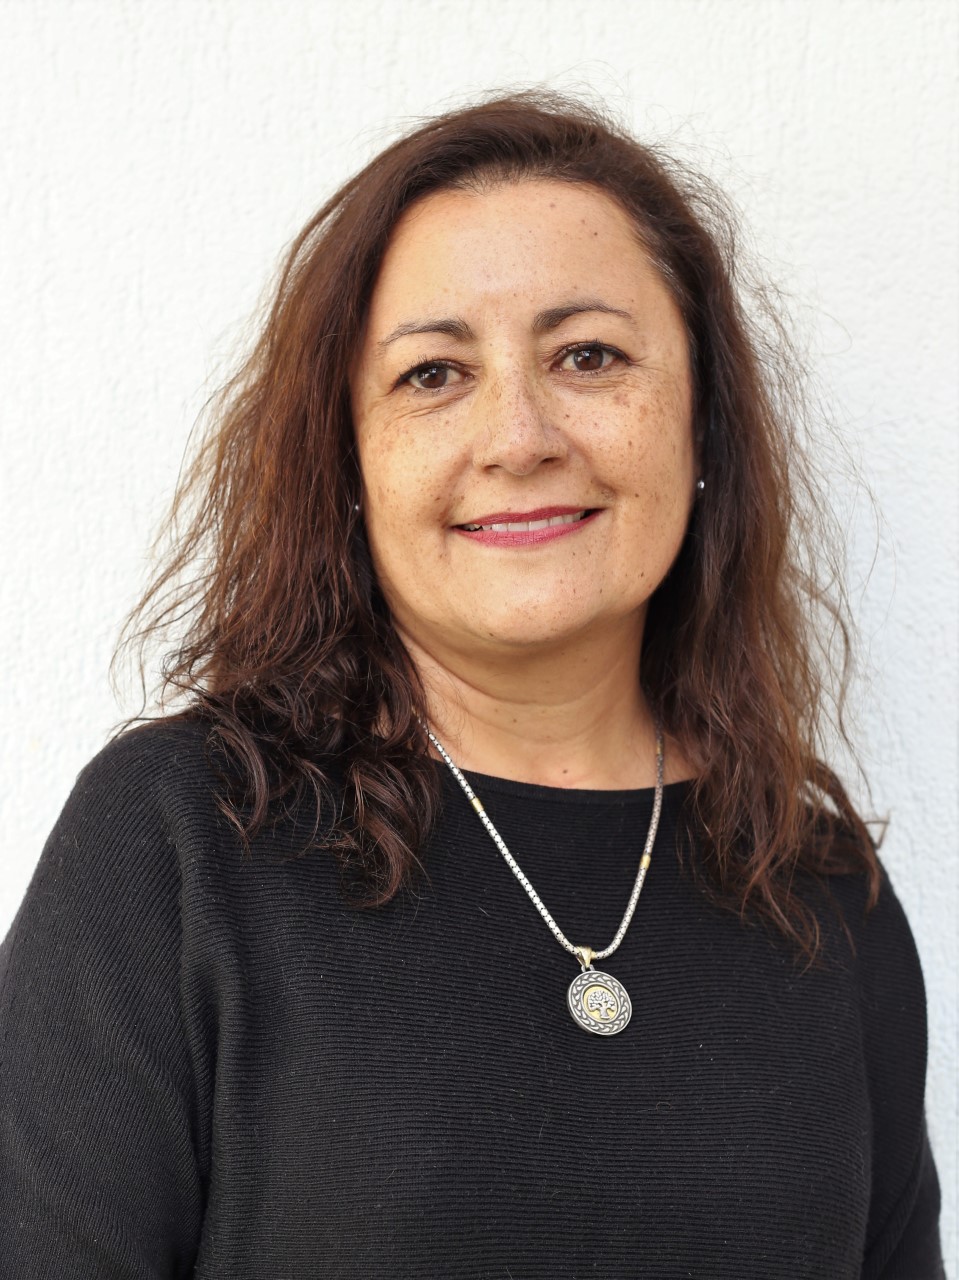 Evelyn Hirsch Martínez